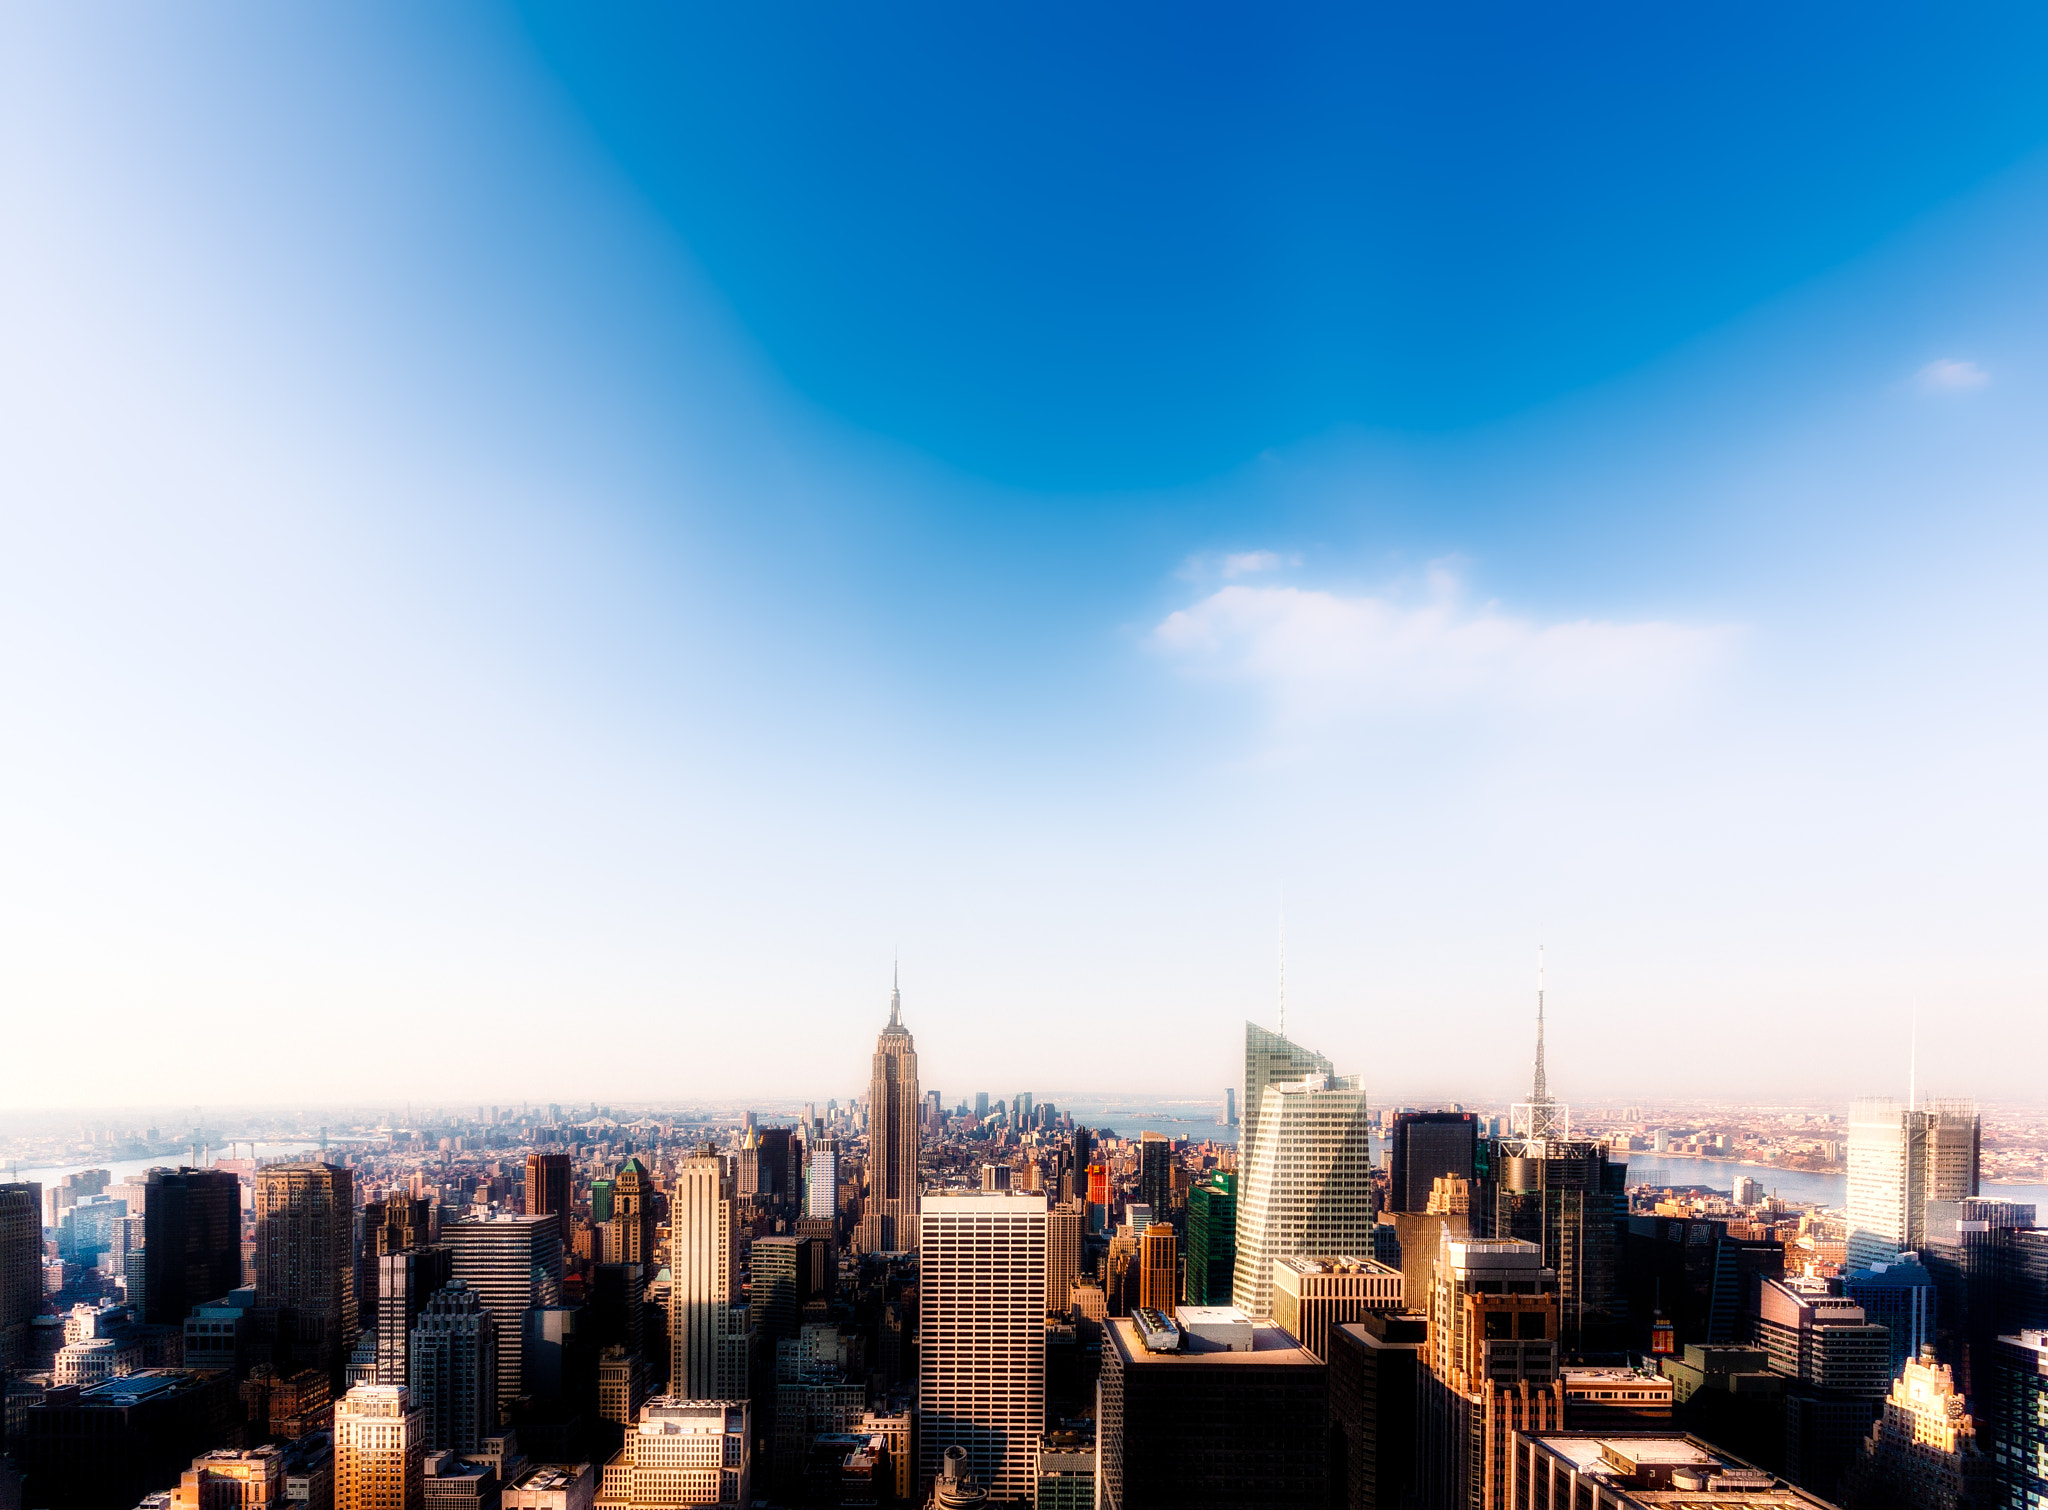 A dreamy Cityscape of New York